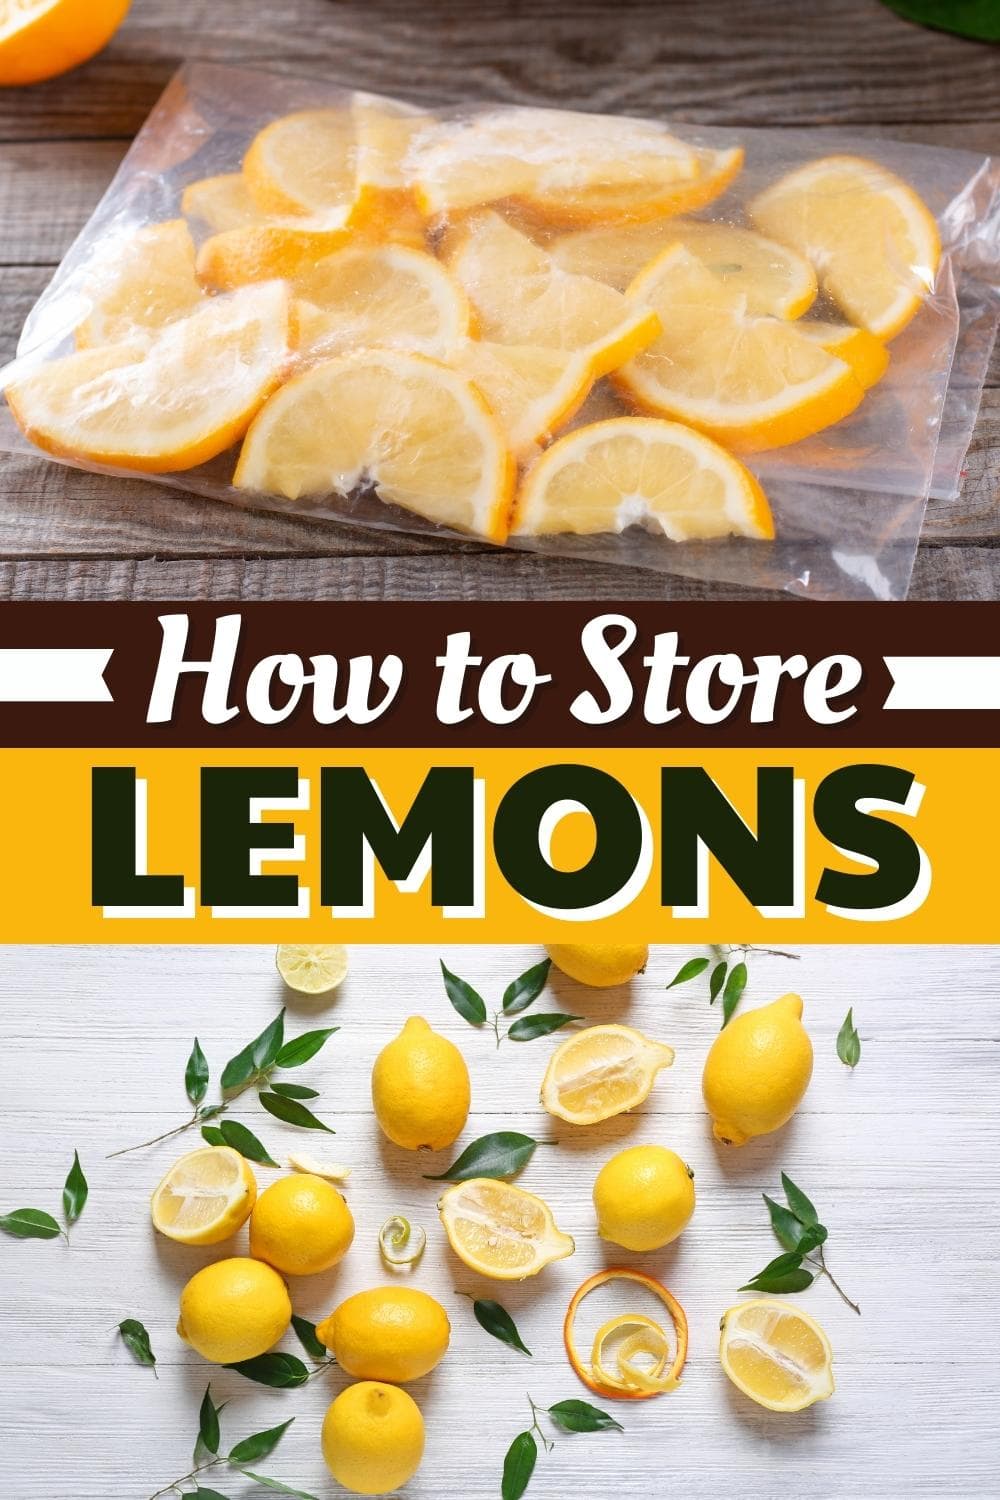 How to Store Lemons